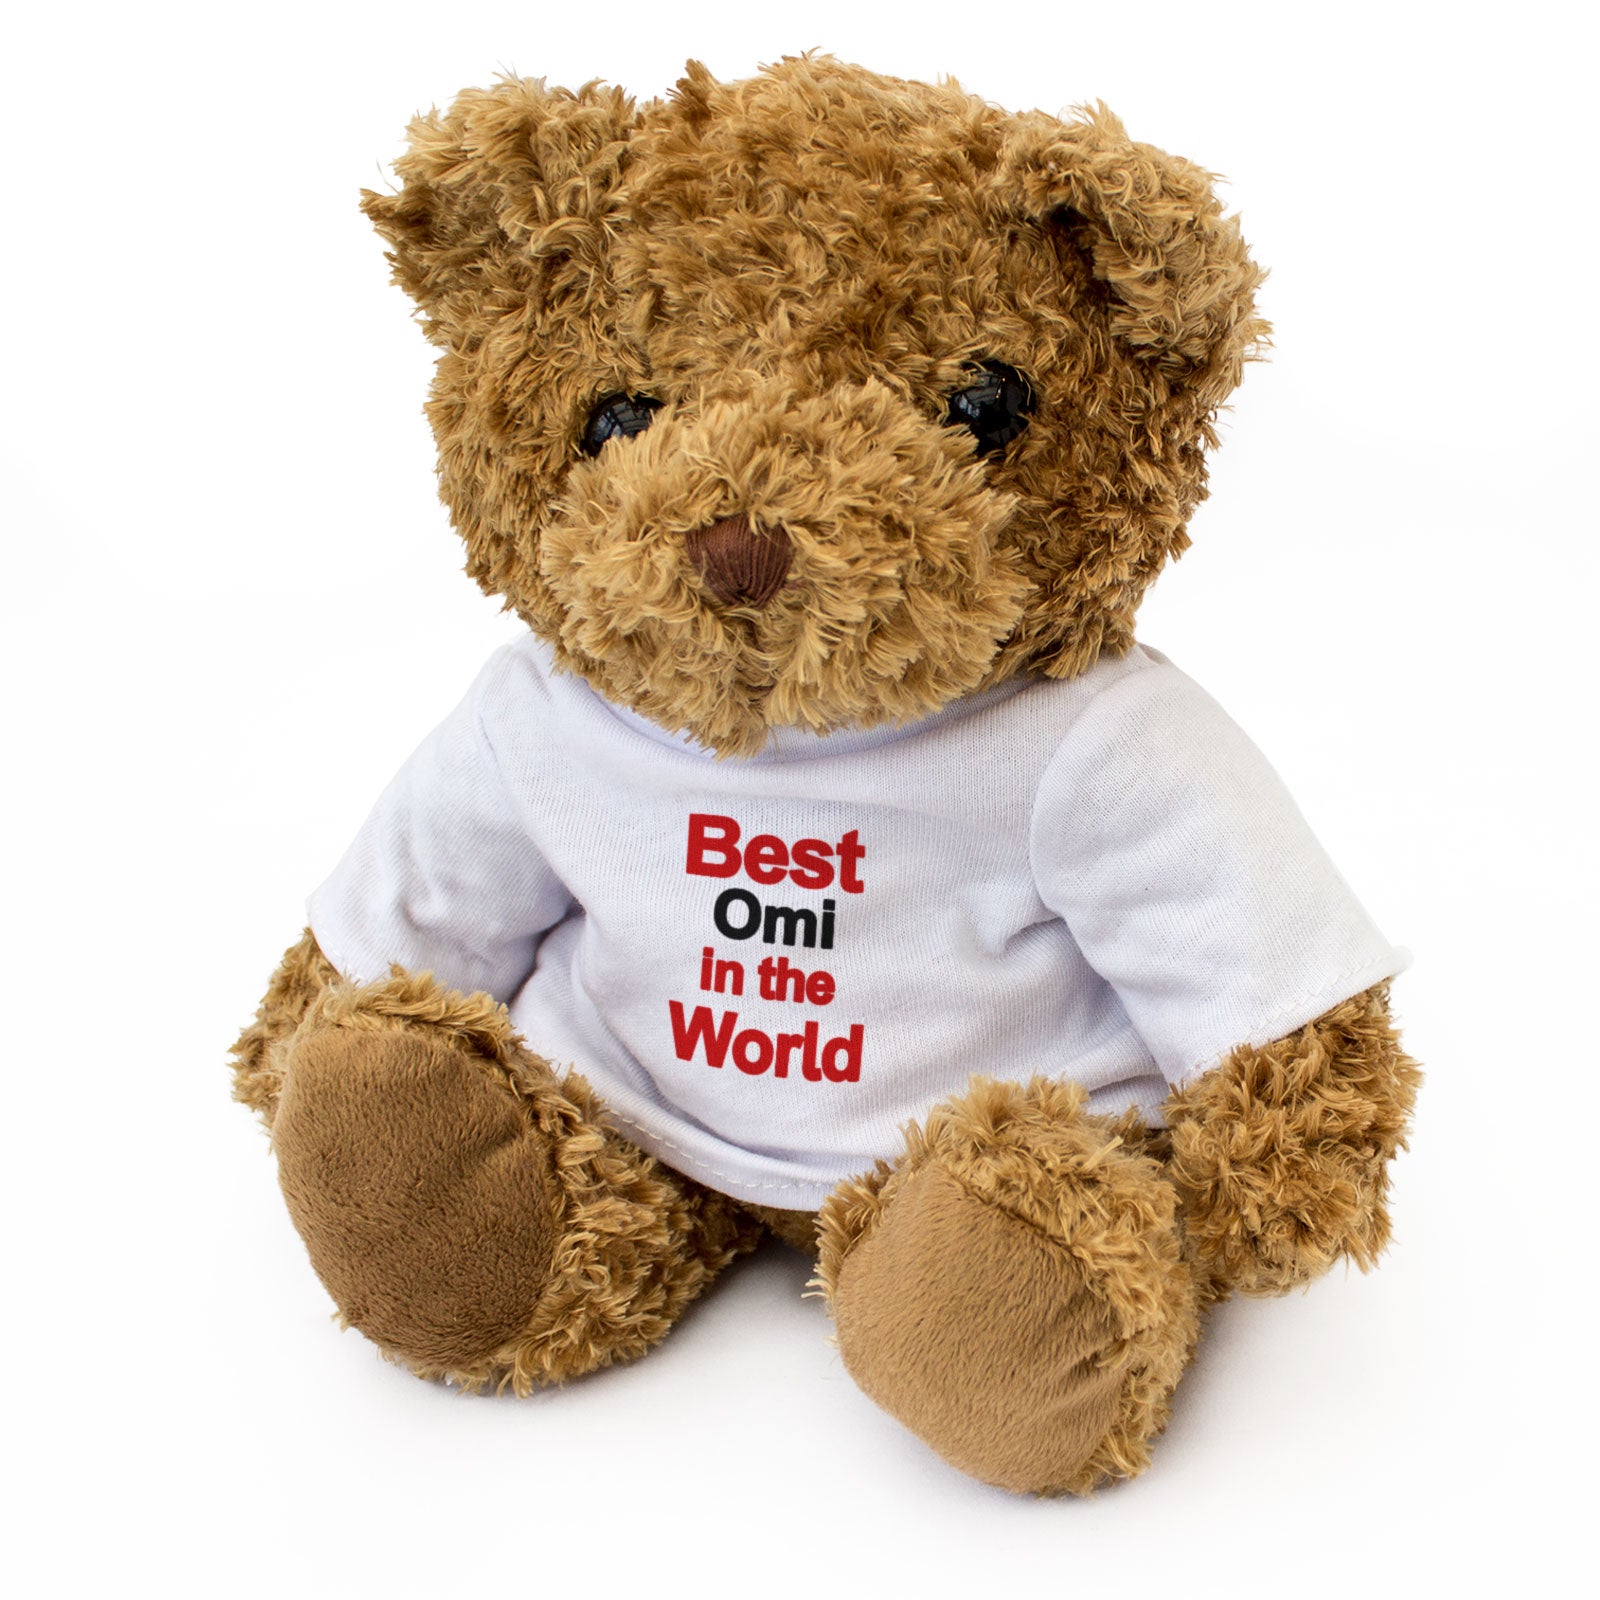 Best Omi In The World - Teddy Bear